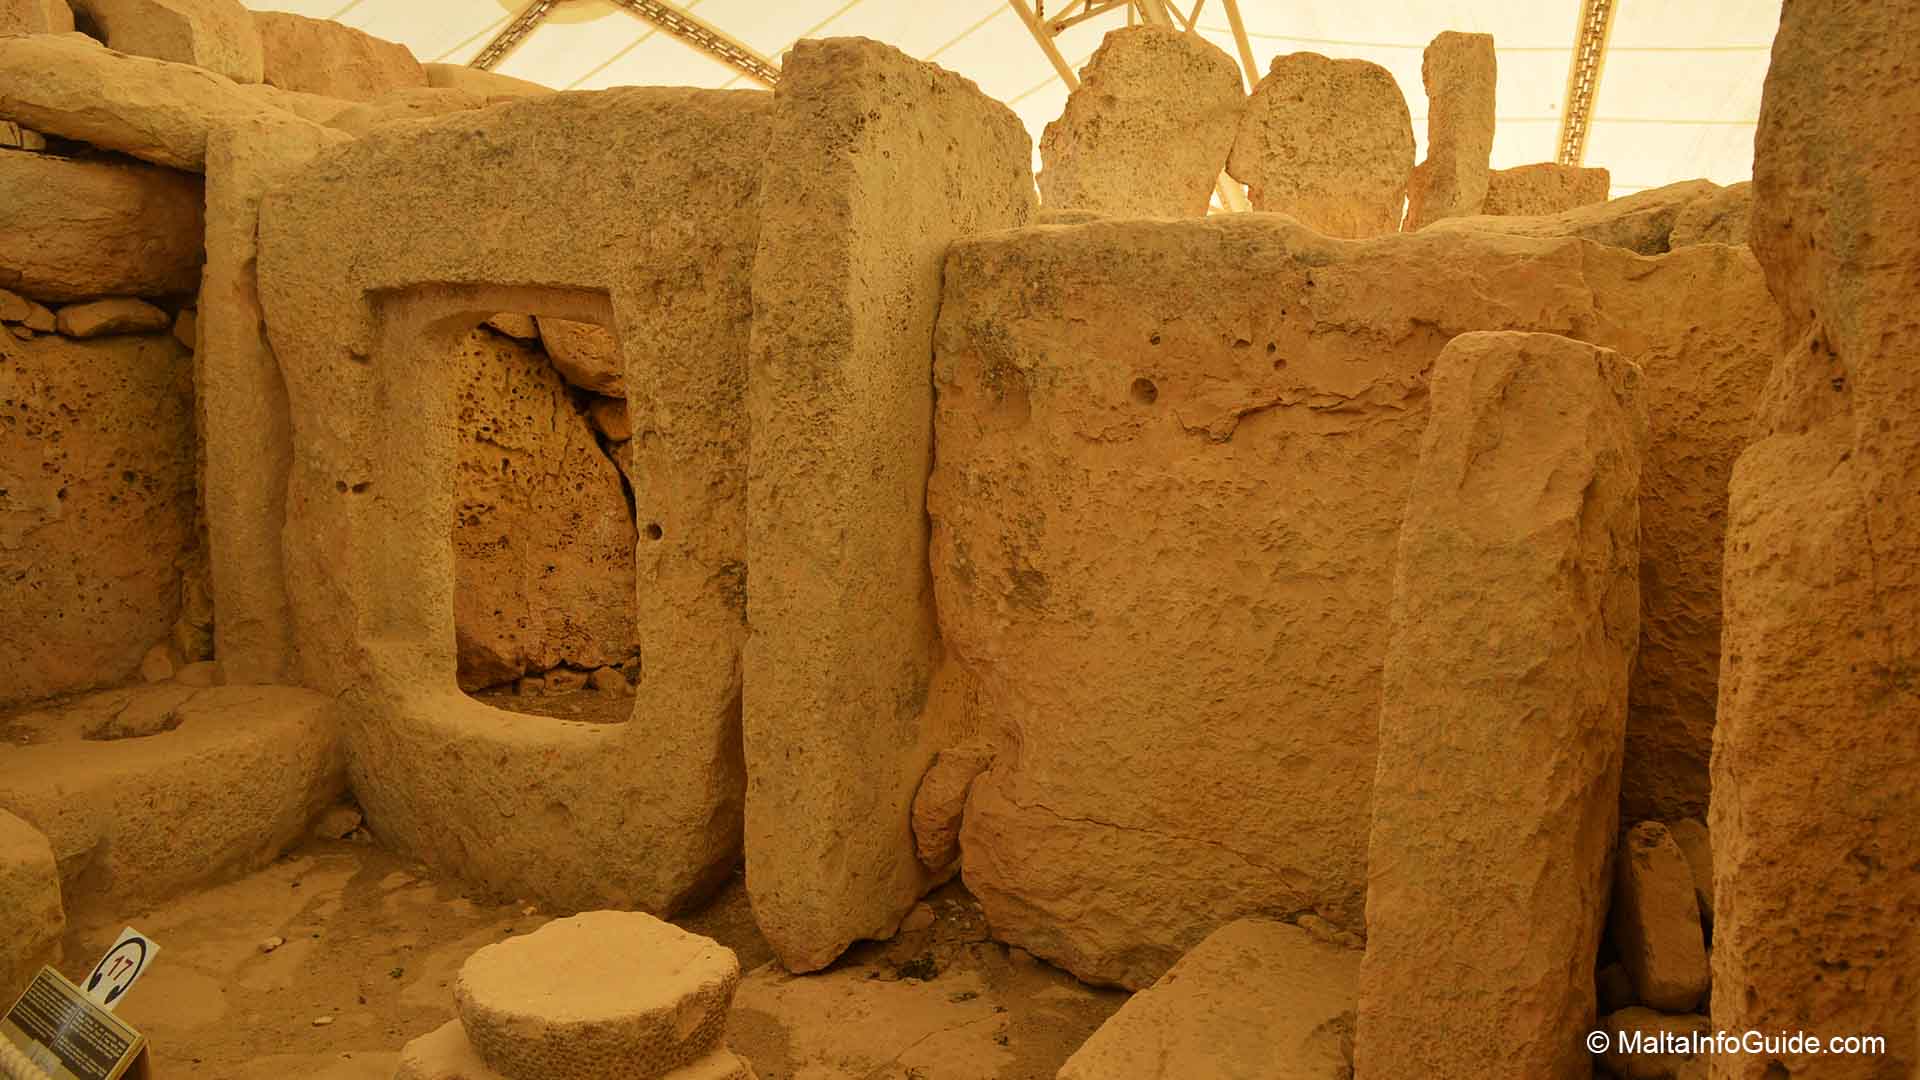 Stones at Hagar Qim temples.